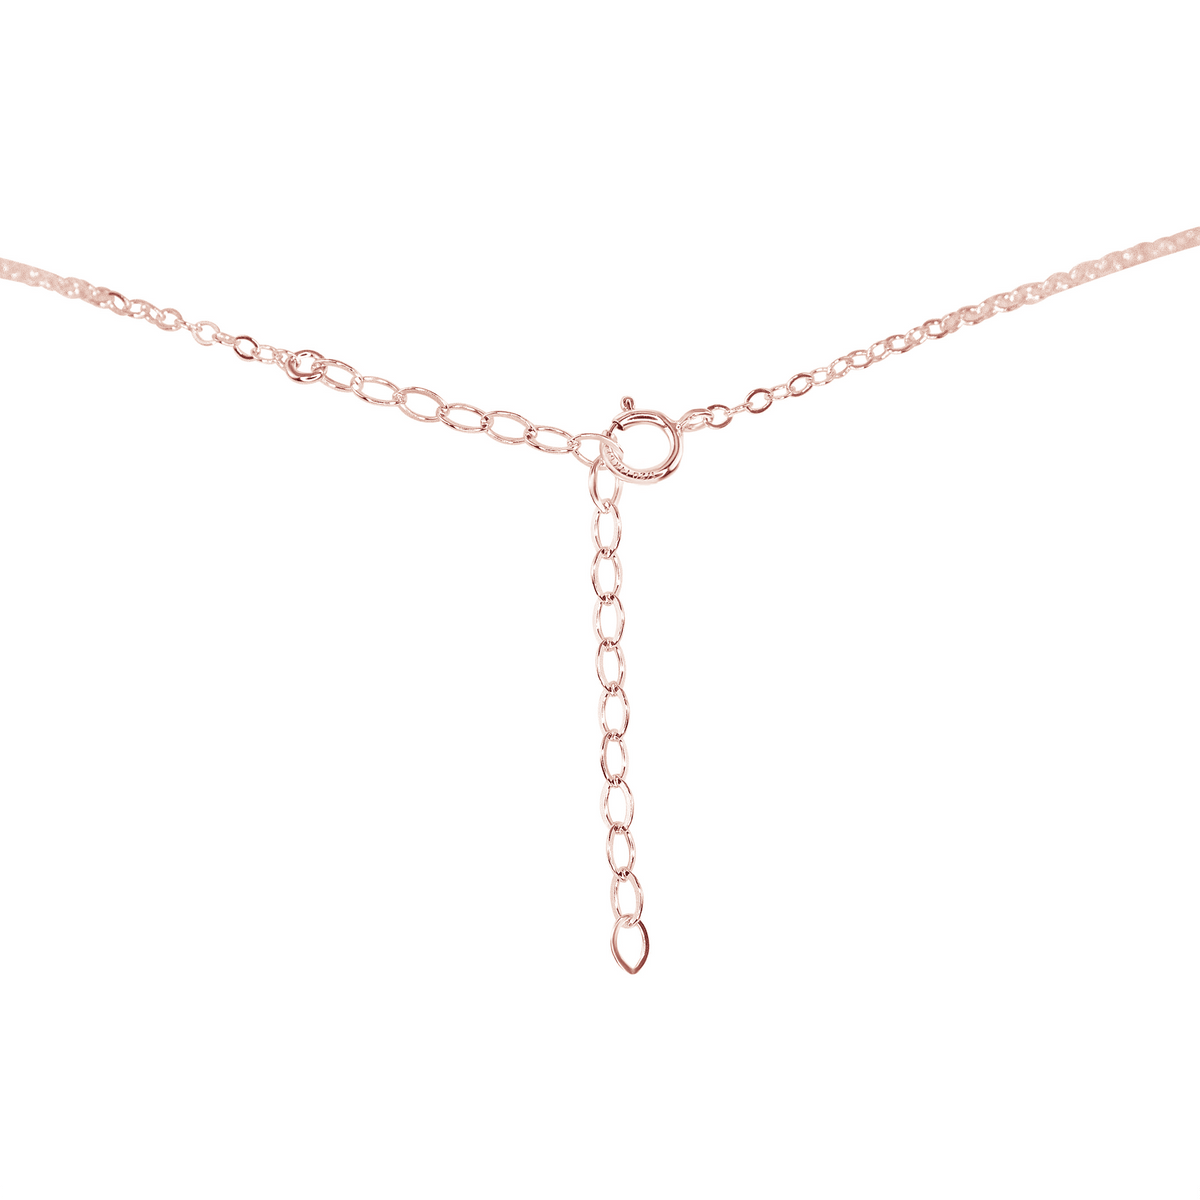 Crystal Quartz Gemstone Chain Layered Choker Necklace - Crystal Quartz Gemstone Chain Layered Choker Necklace - 14k Gold Fill - Luna Tide Handmade Crystal Jewellery